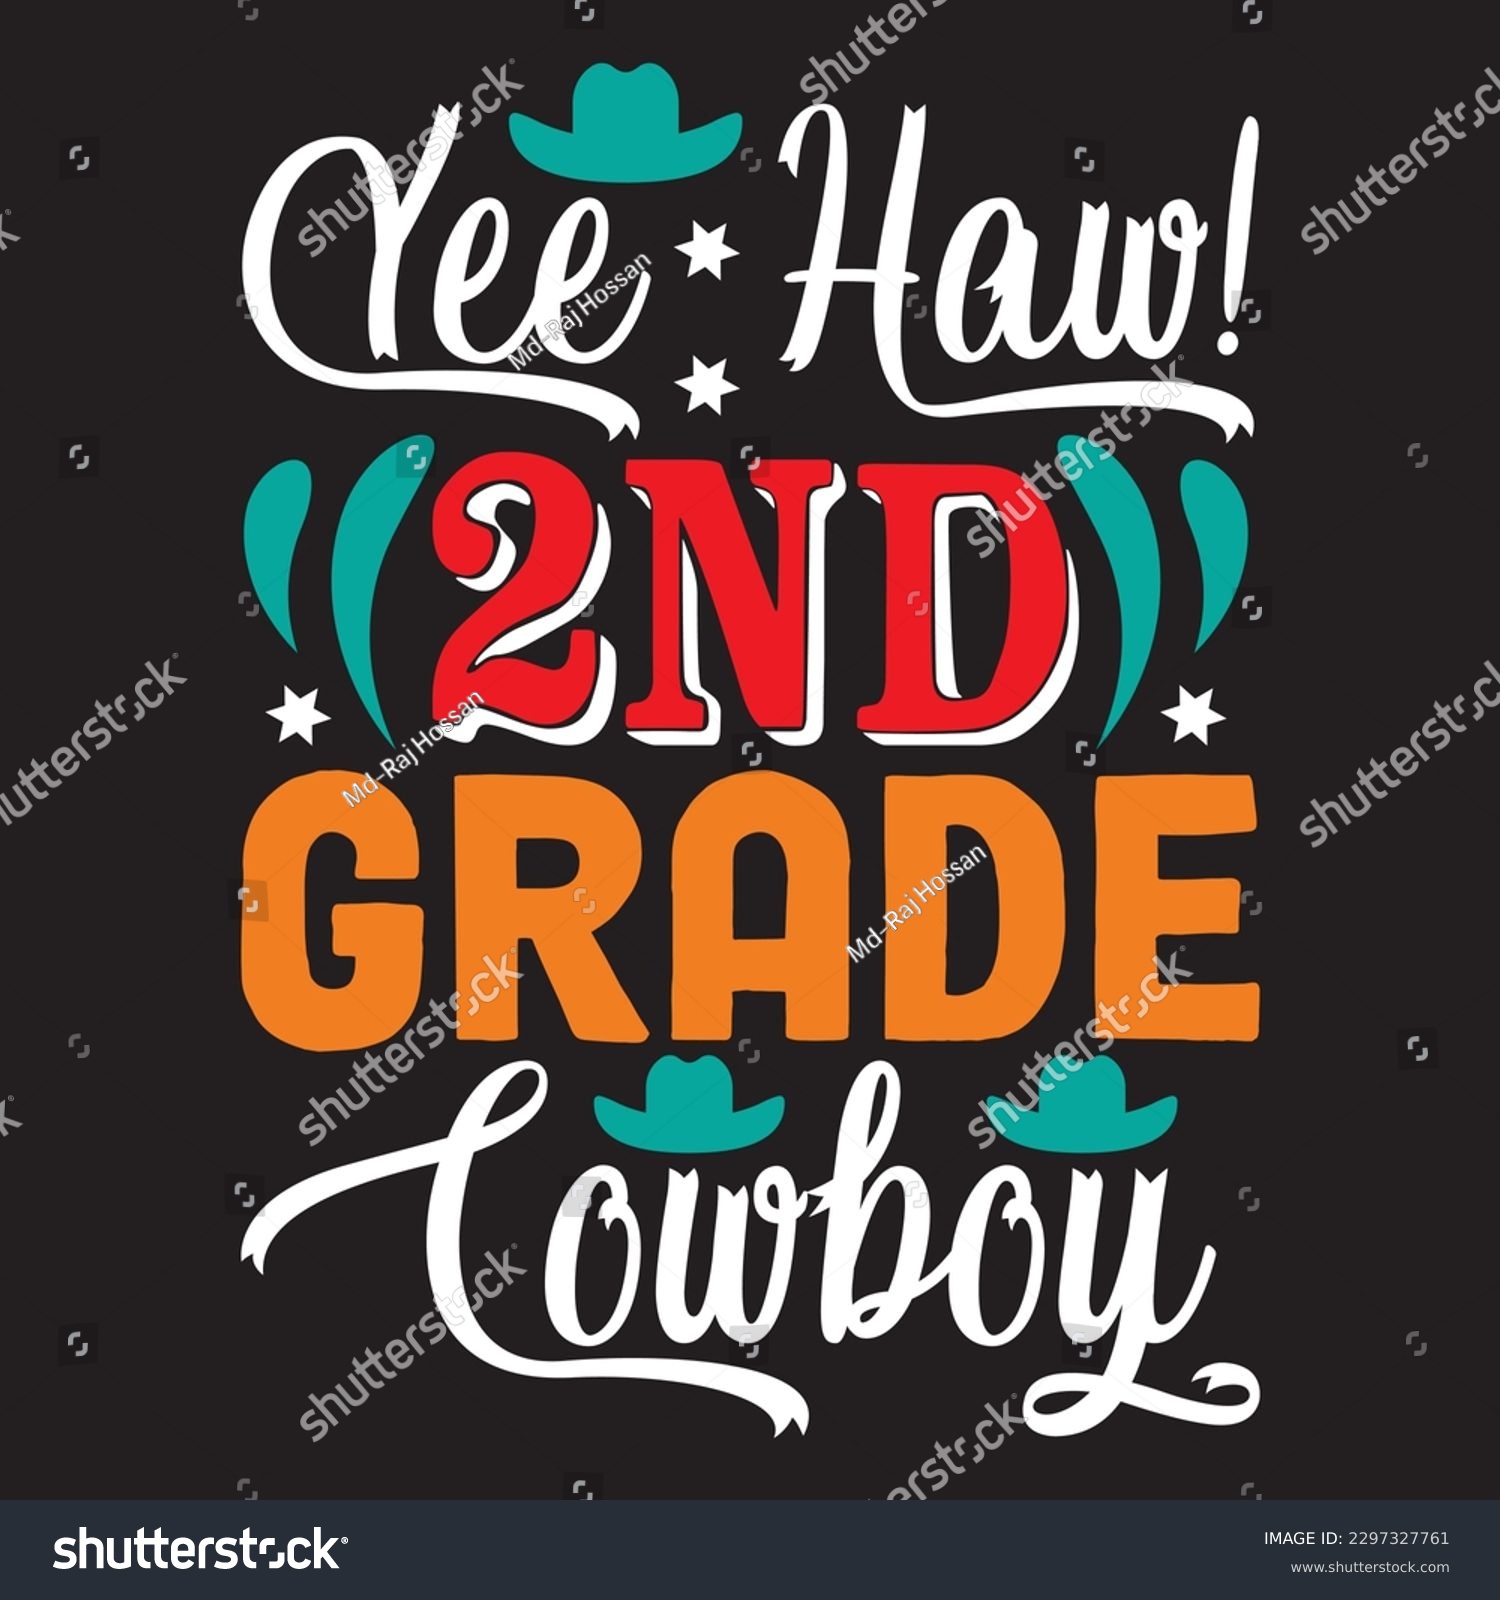 SVG of Yee Haw! 2nd grade Cowboy T-shirt Design Vector File svg